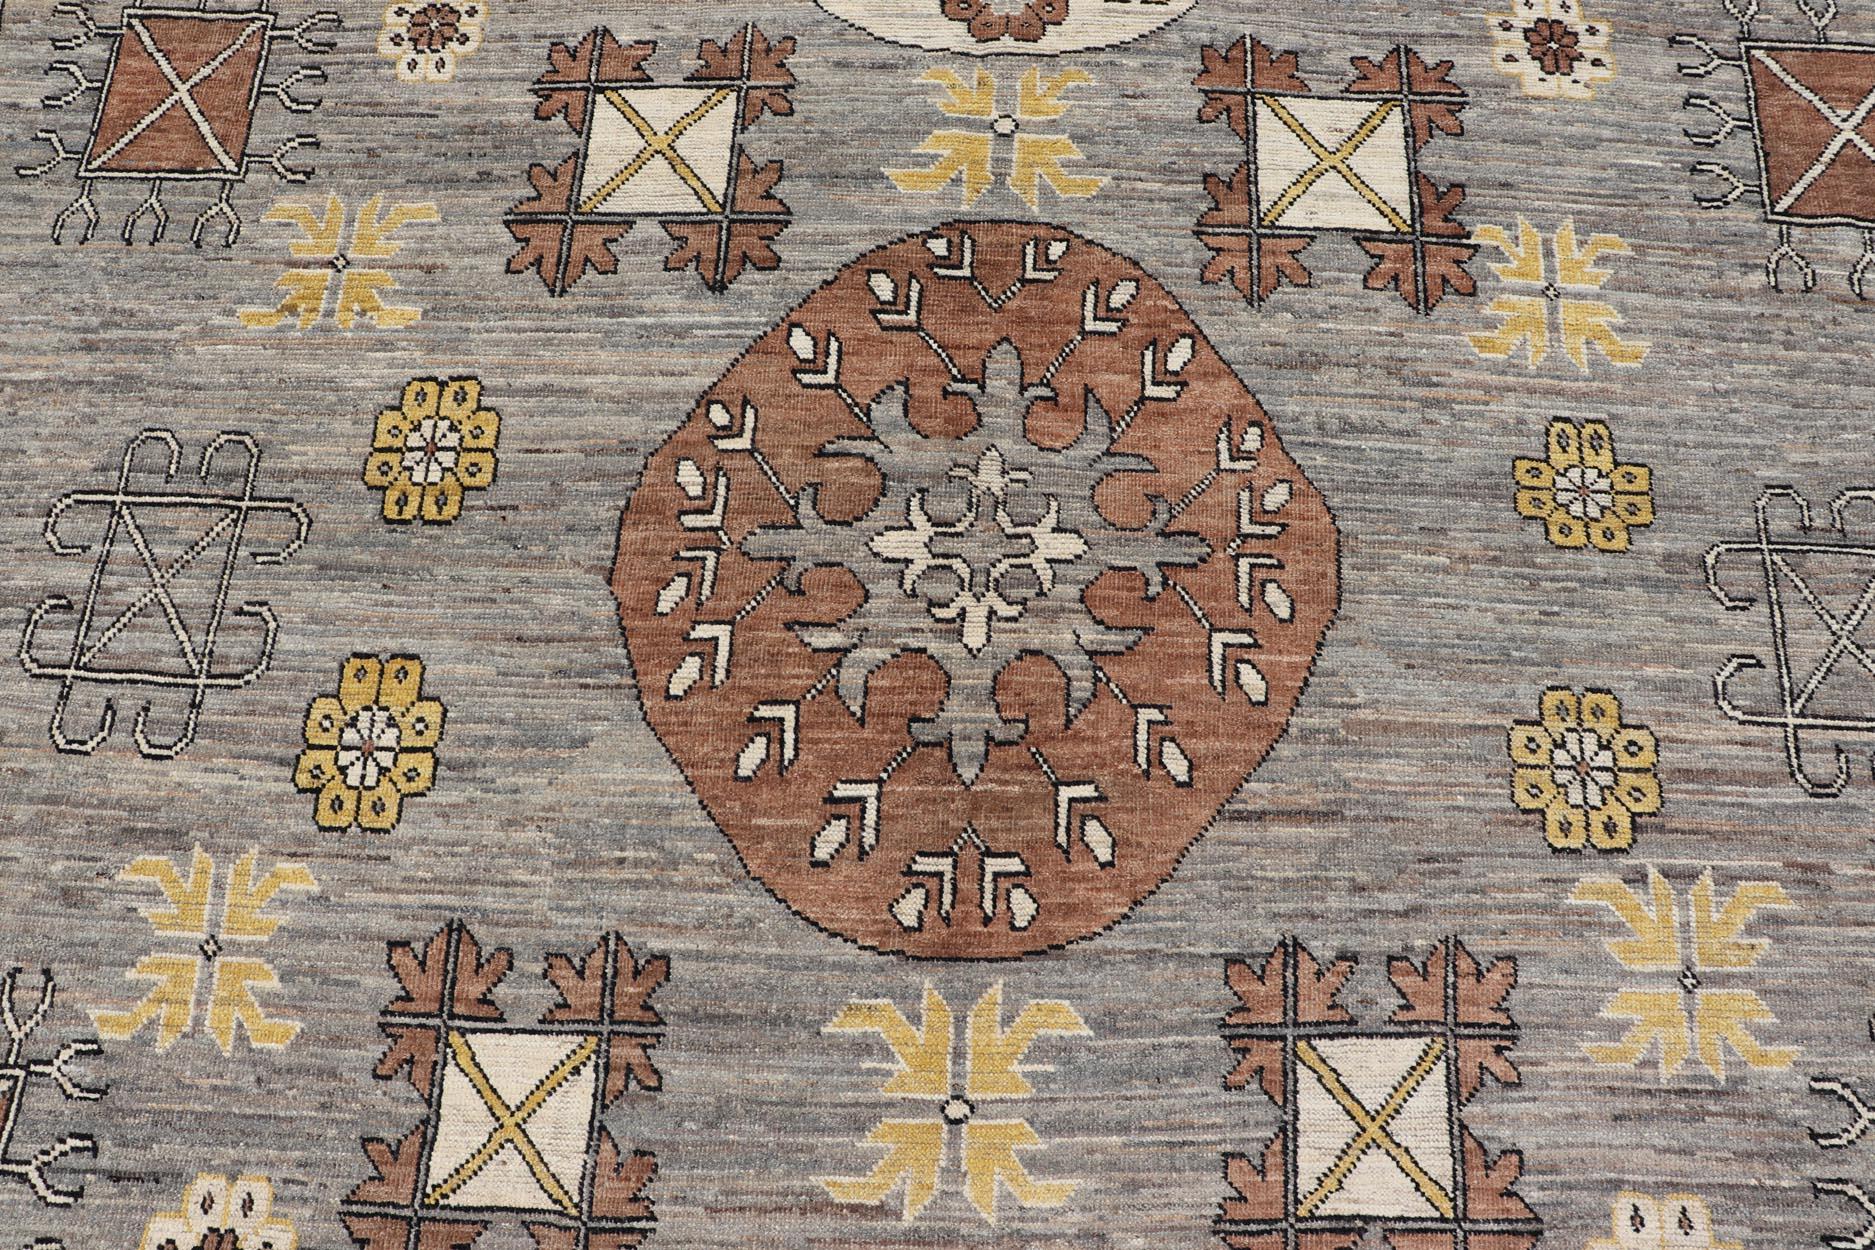 medallion pattern rug